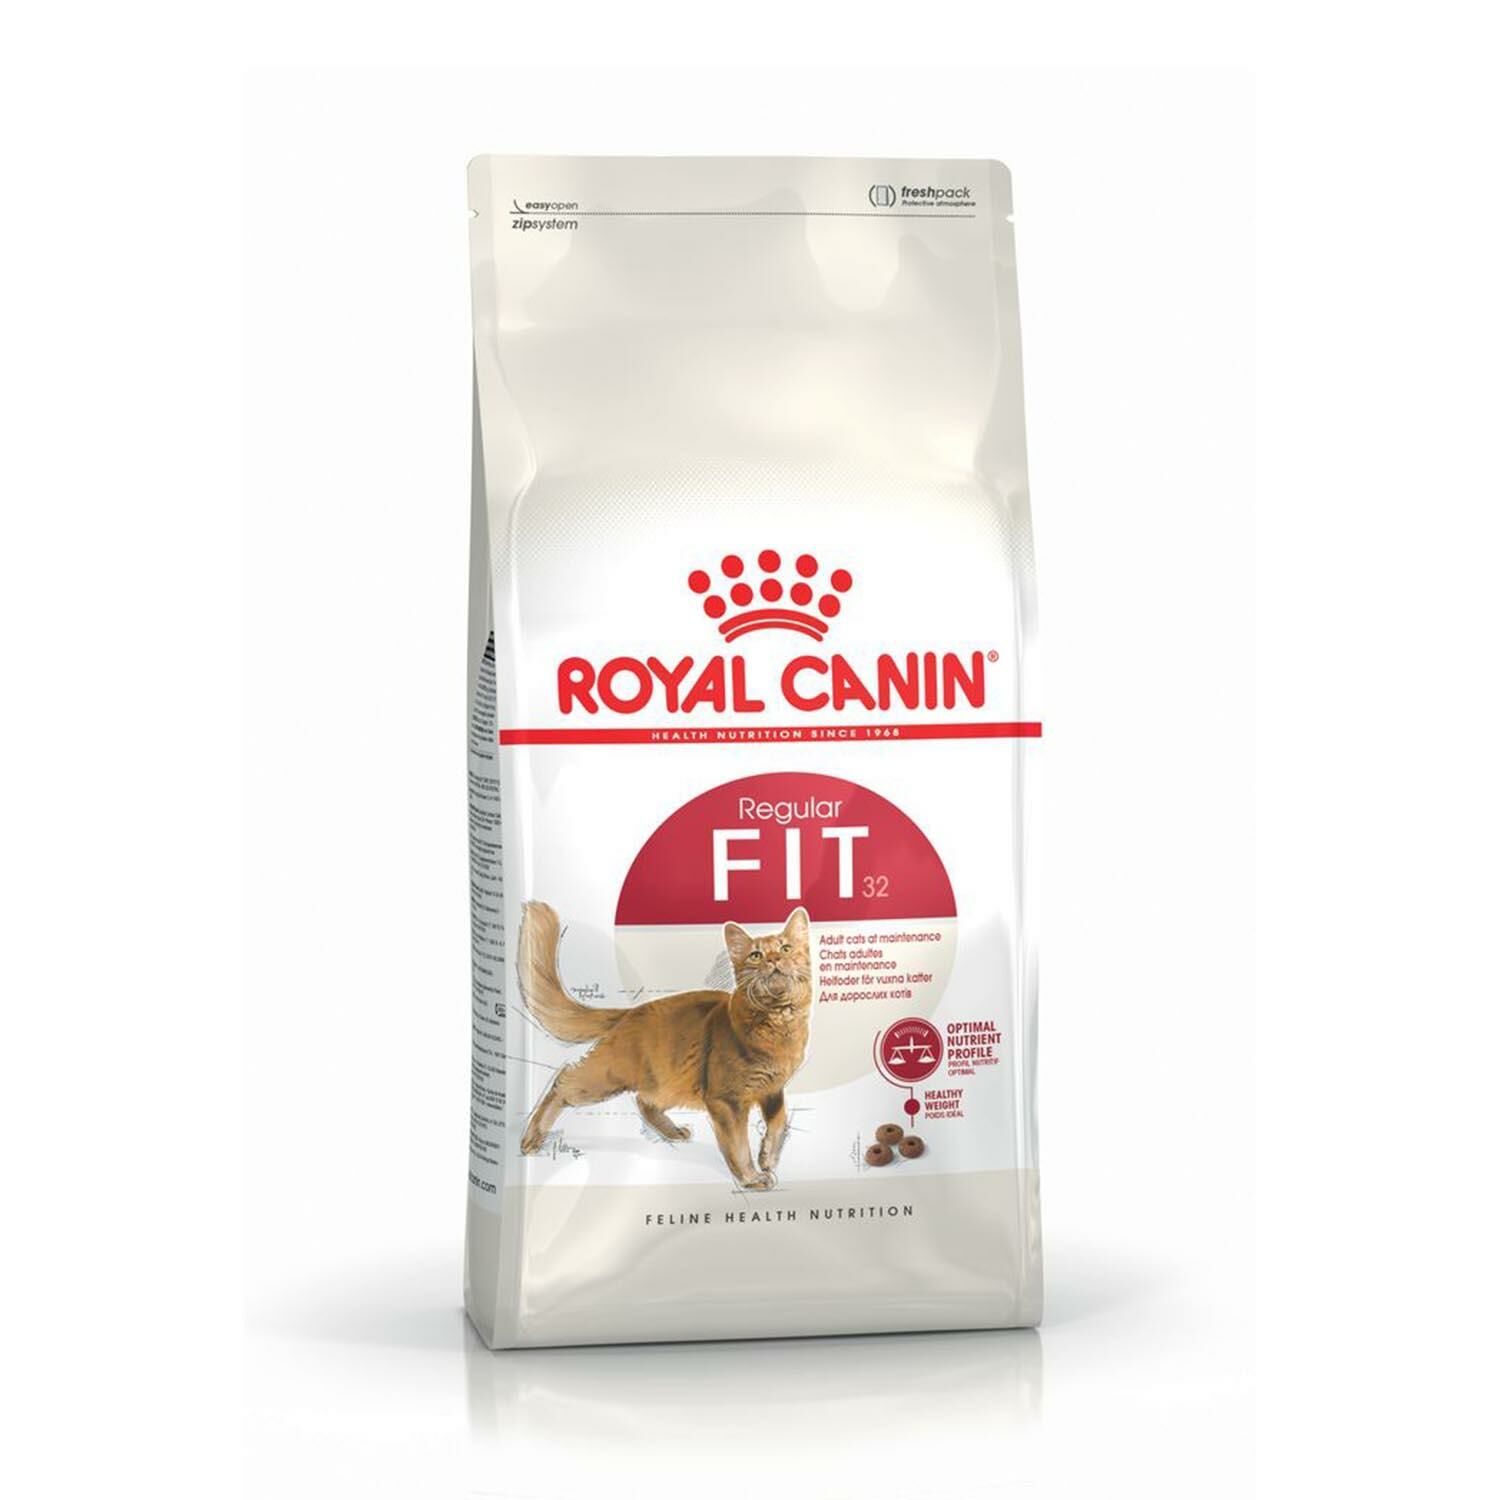 Royal Canin Fit 32 Yetişkin Kedi Maması 10 kg